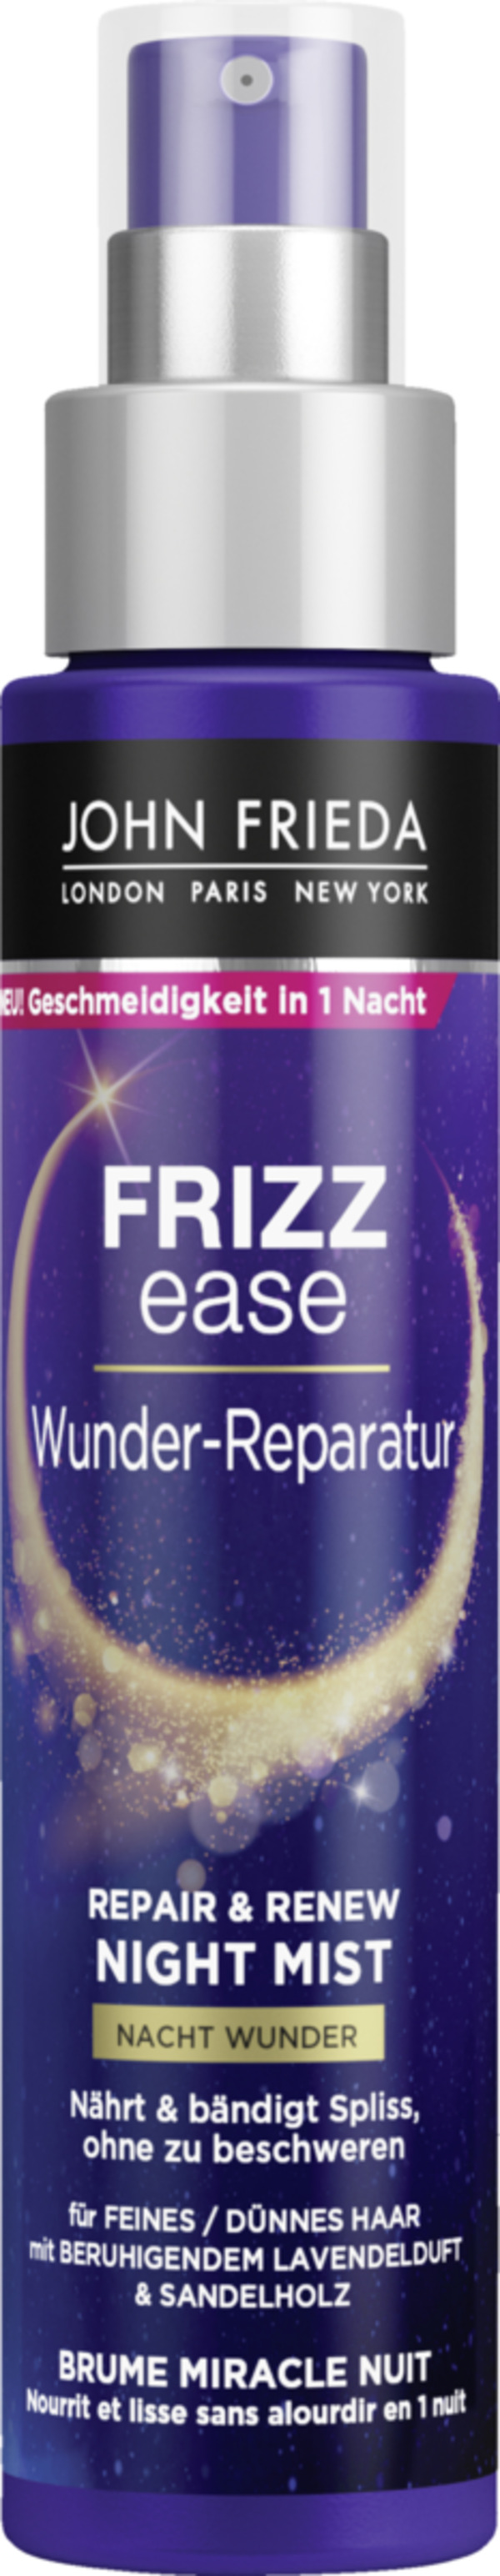 Bild 1 von JOHN FRIEDA FRIZZ ease Wunder-Reparatur Repair & Renew Night Mist